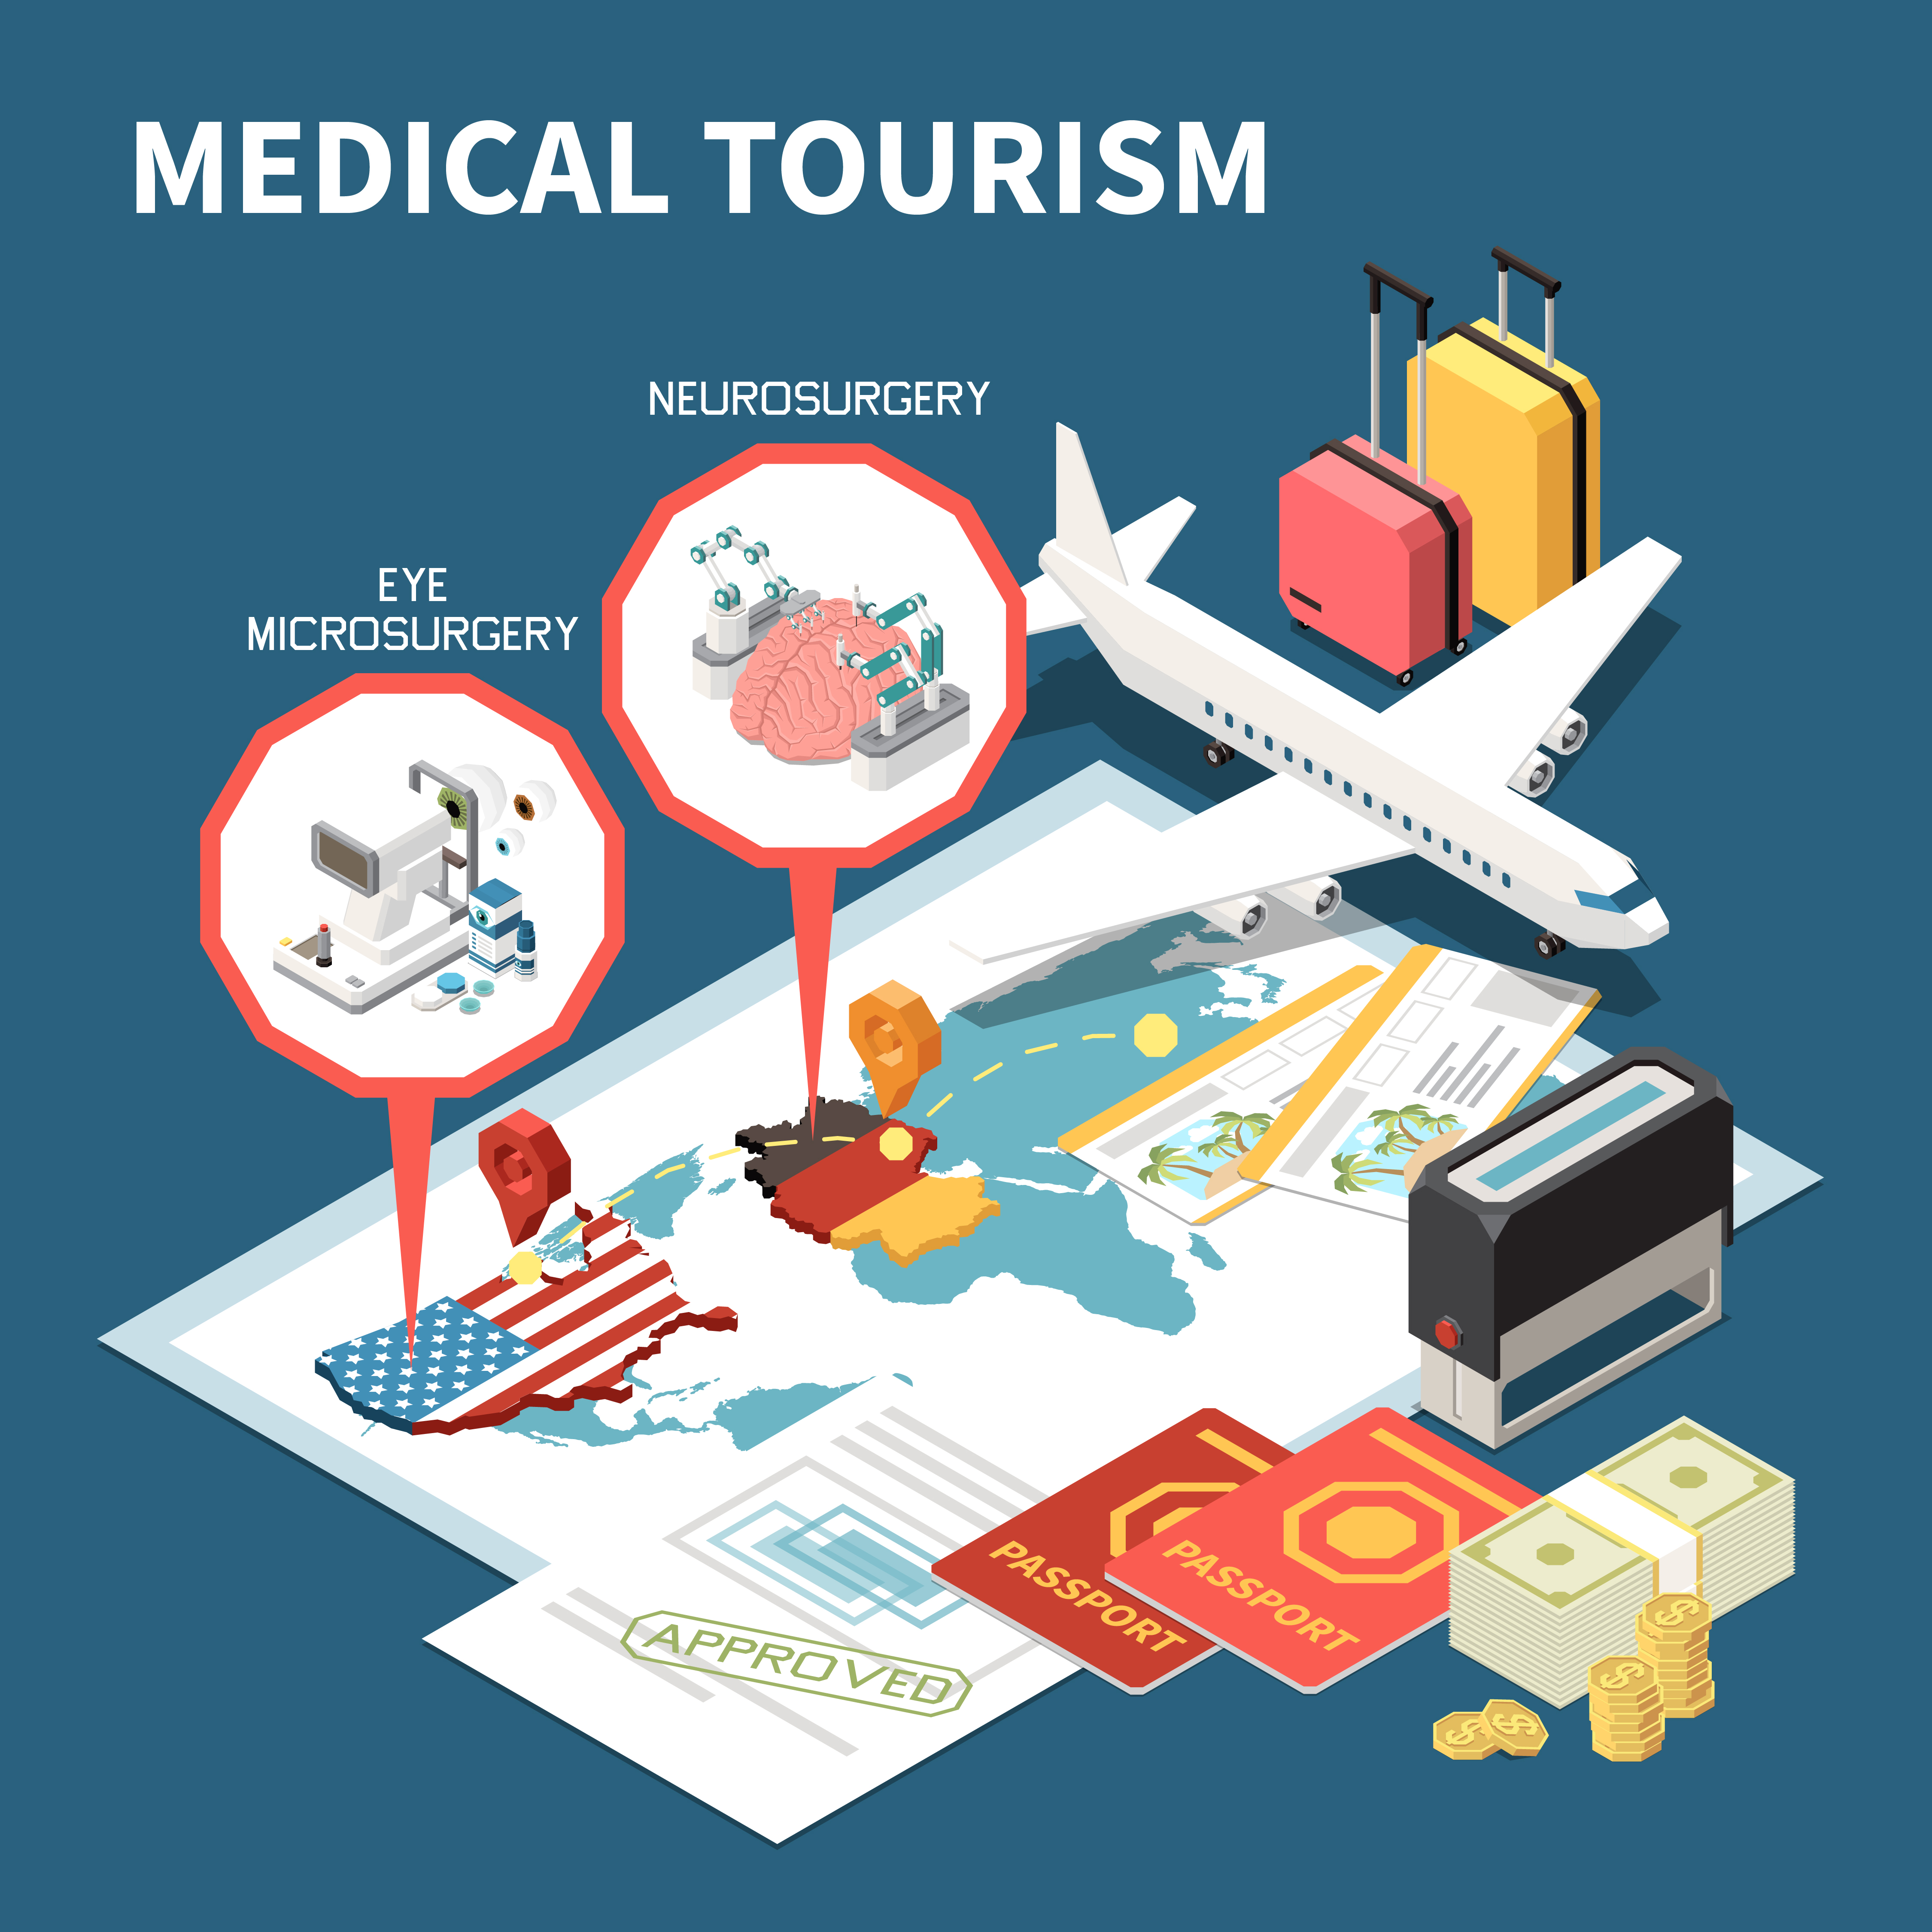 Definition of Medical Tourism